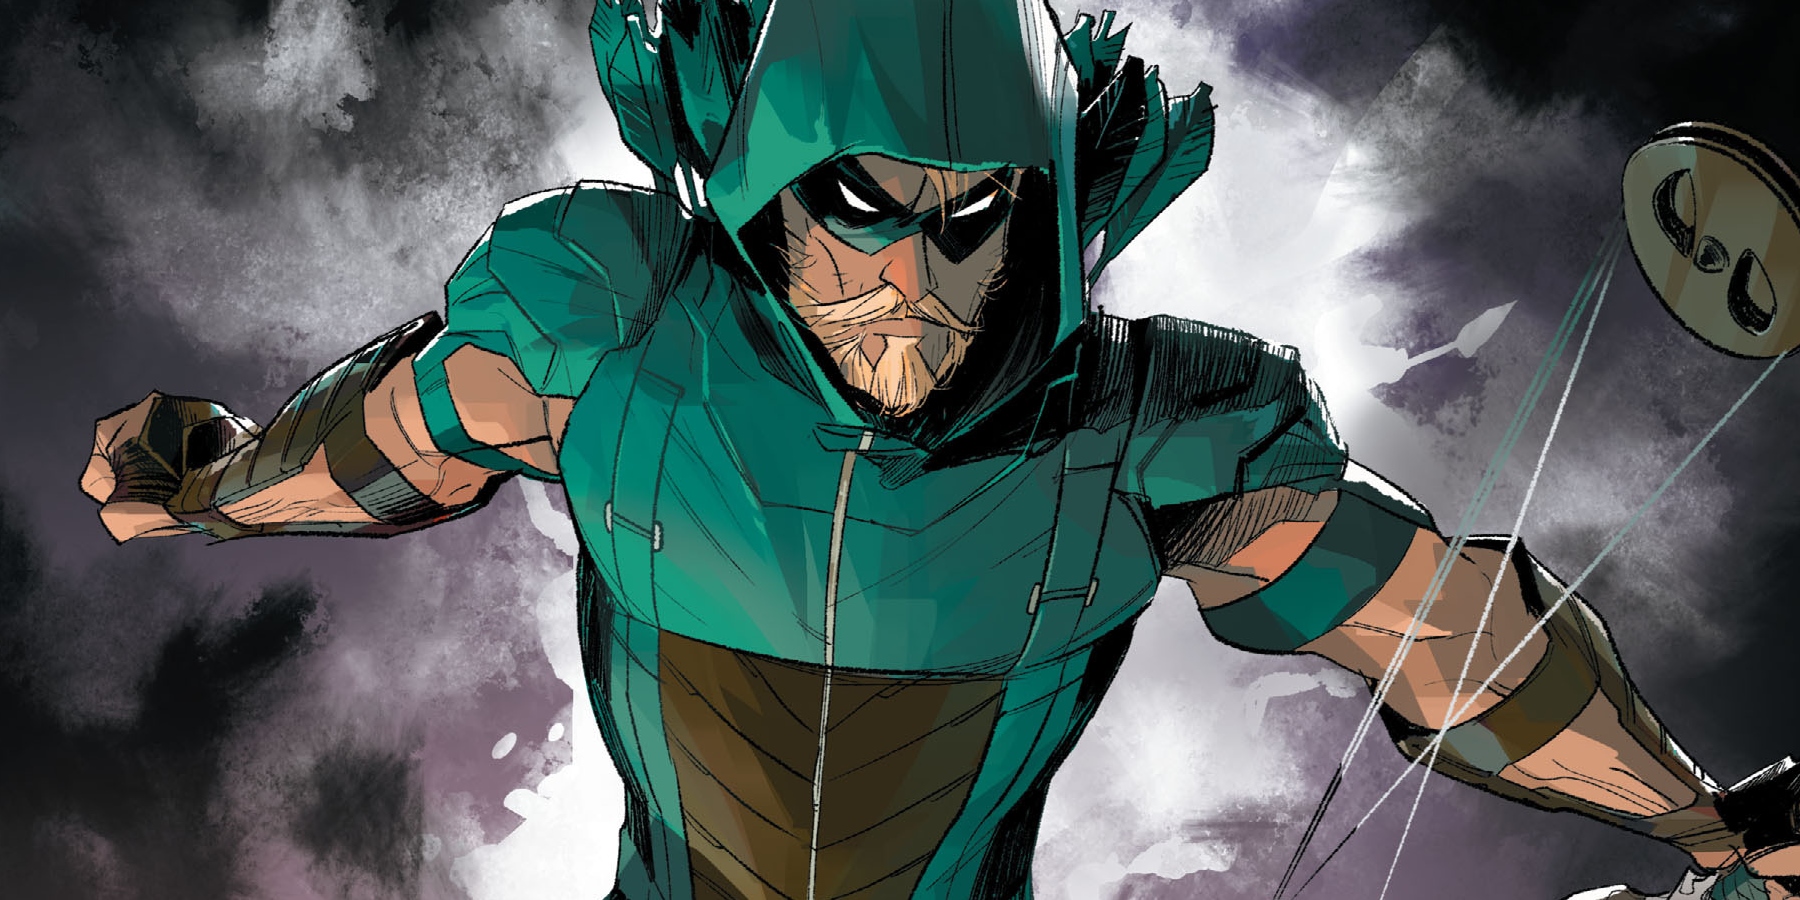 Green Arrow #20